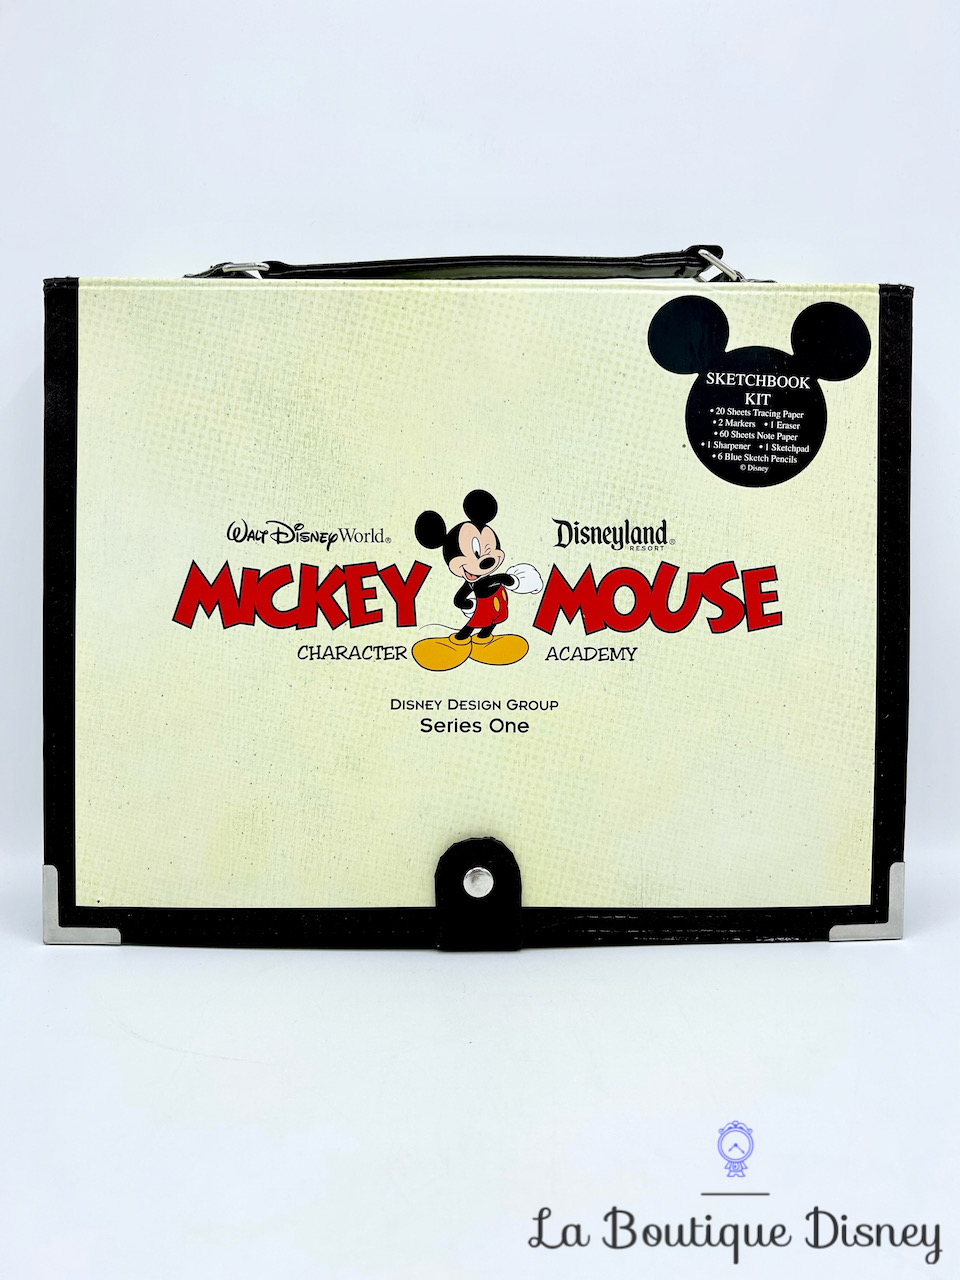 coffret-dessin-mickey-mouse-character-academy-disney-design-group-series-one-walt-disney-world-disneyland-resort-USA-sketchbook-kit-1